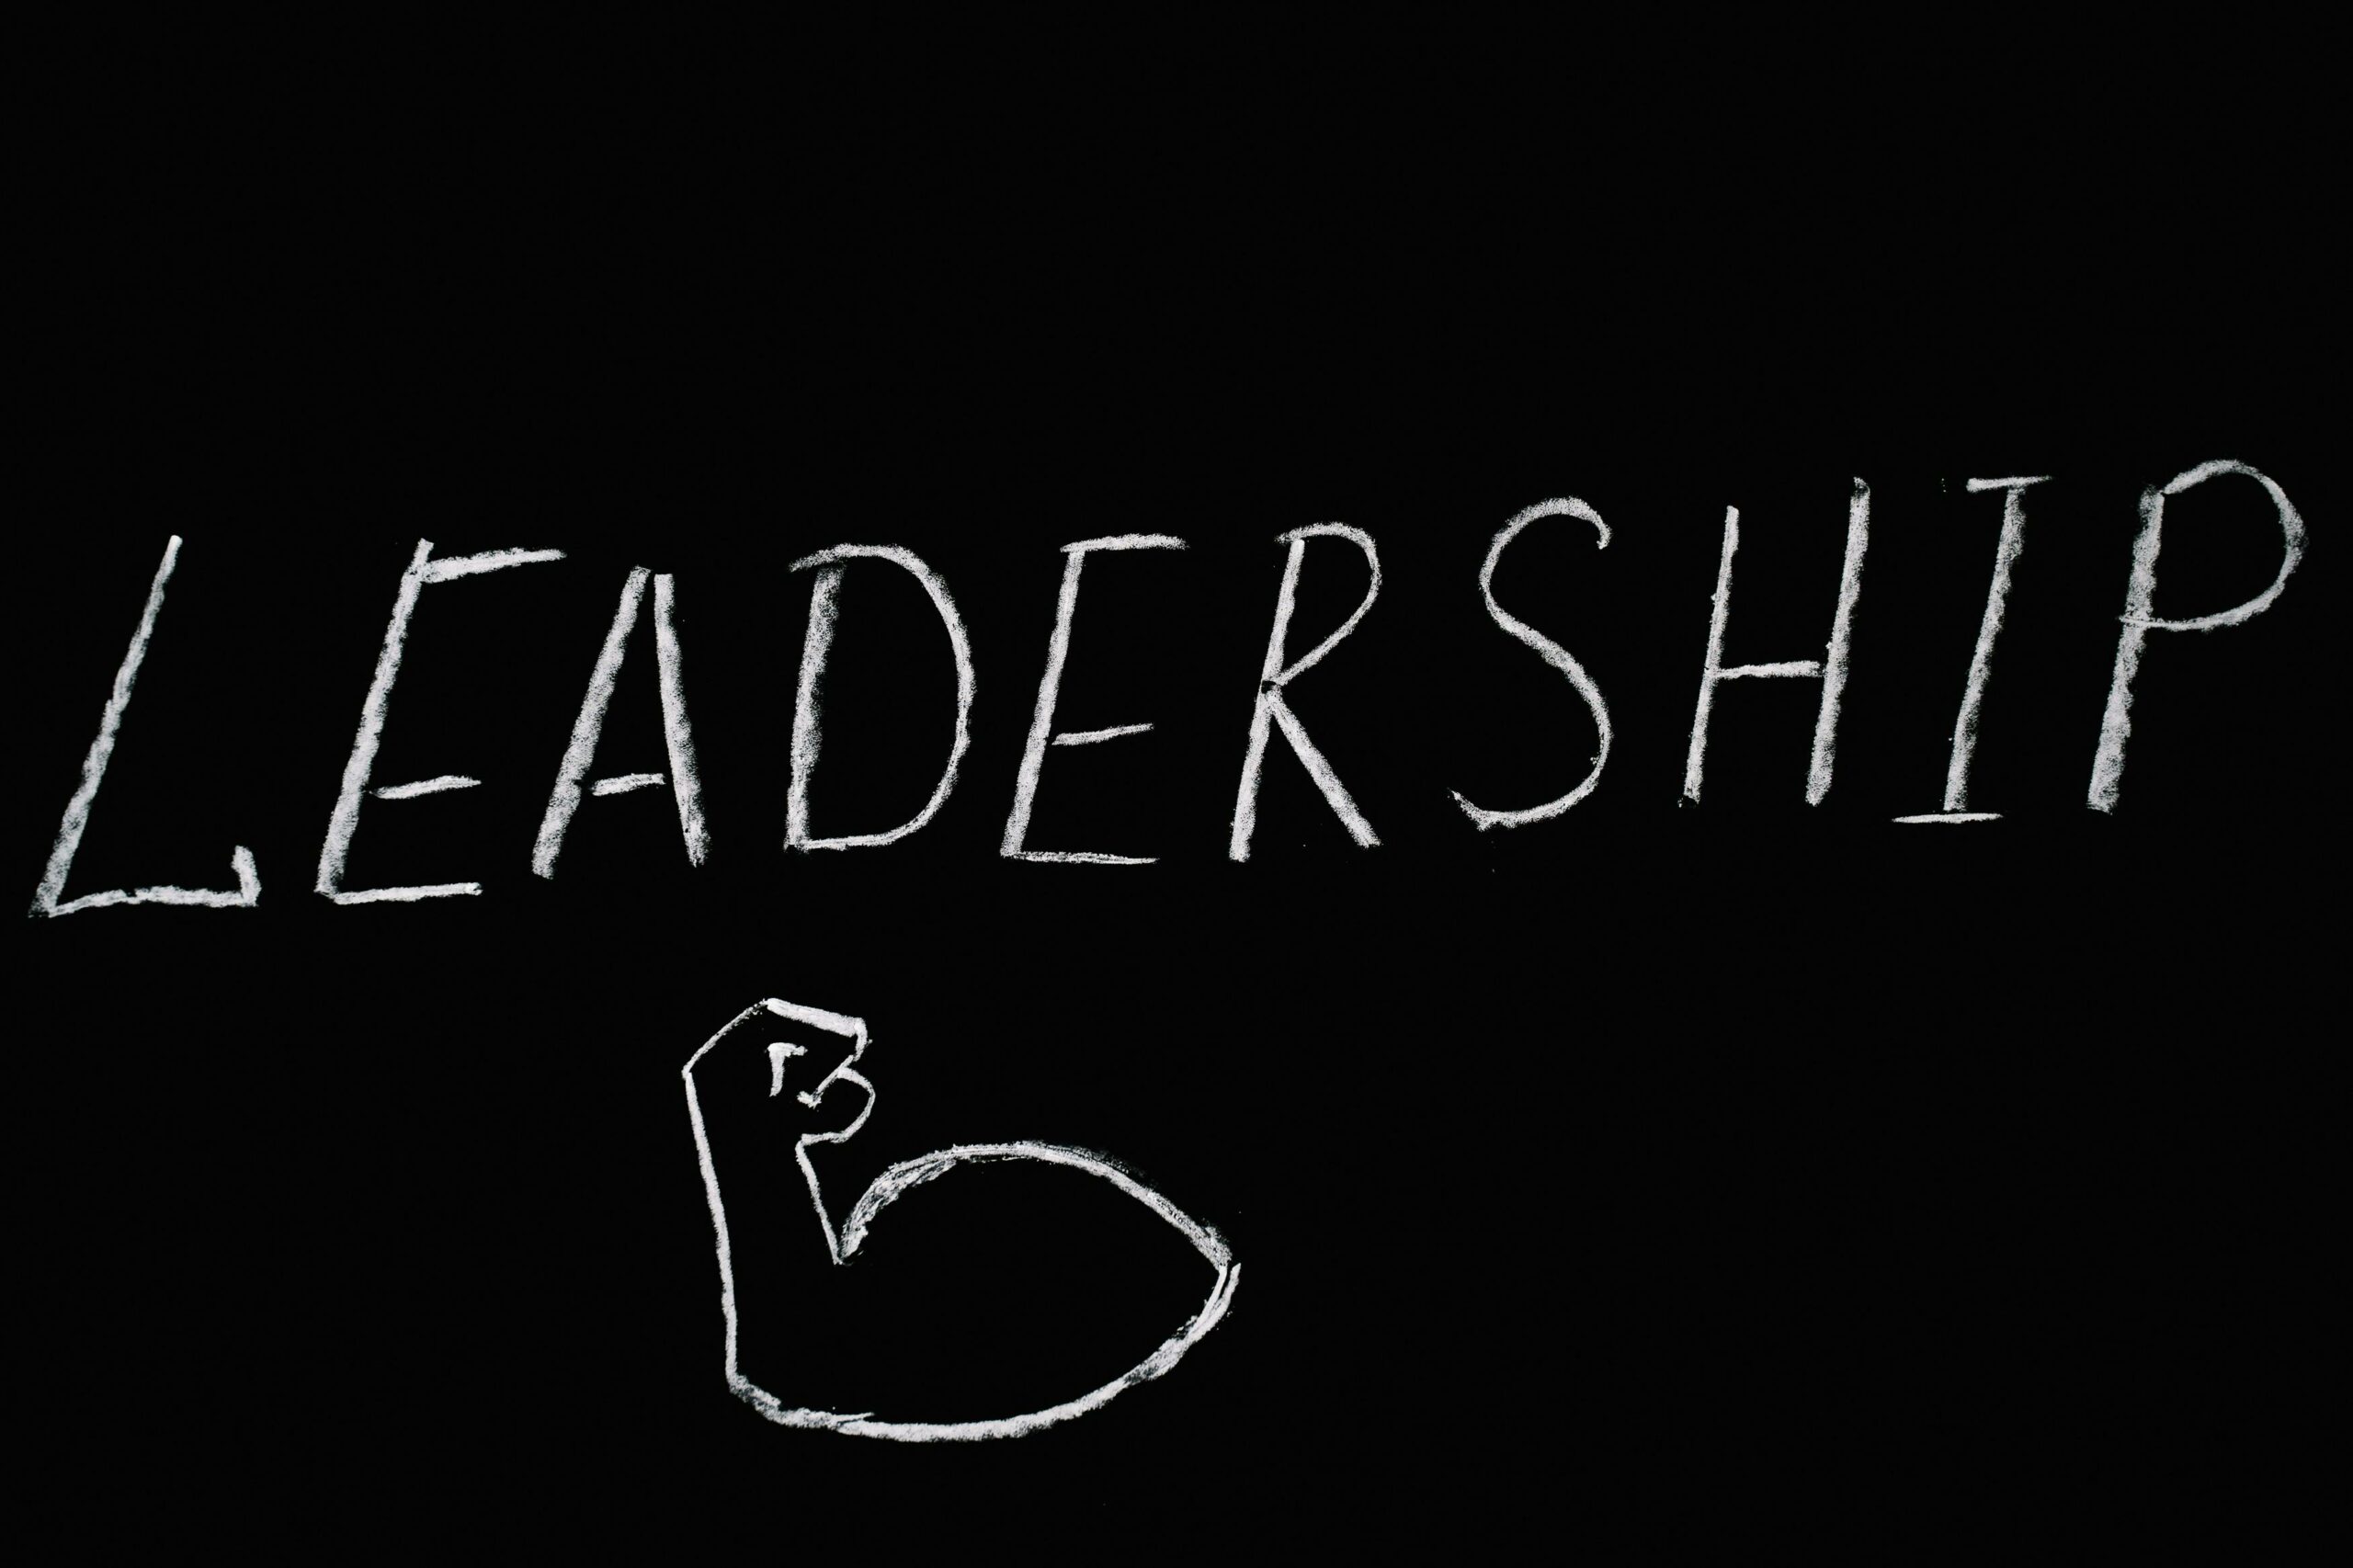 the words "leadership" written in chalk